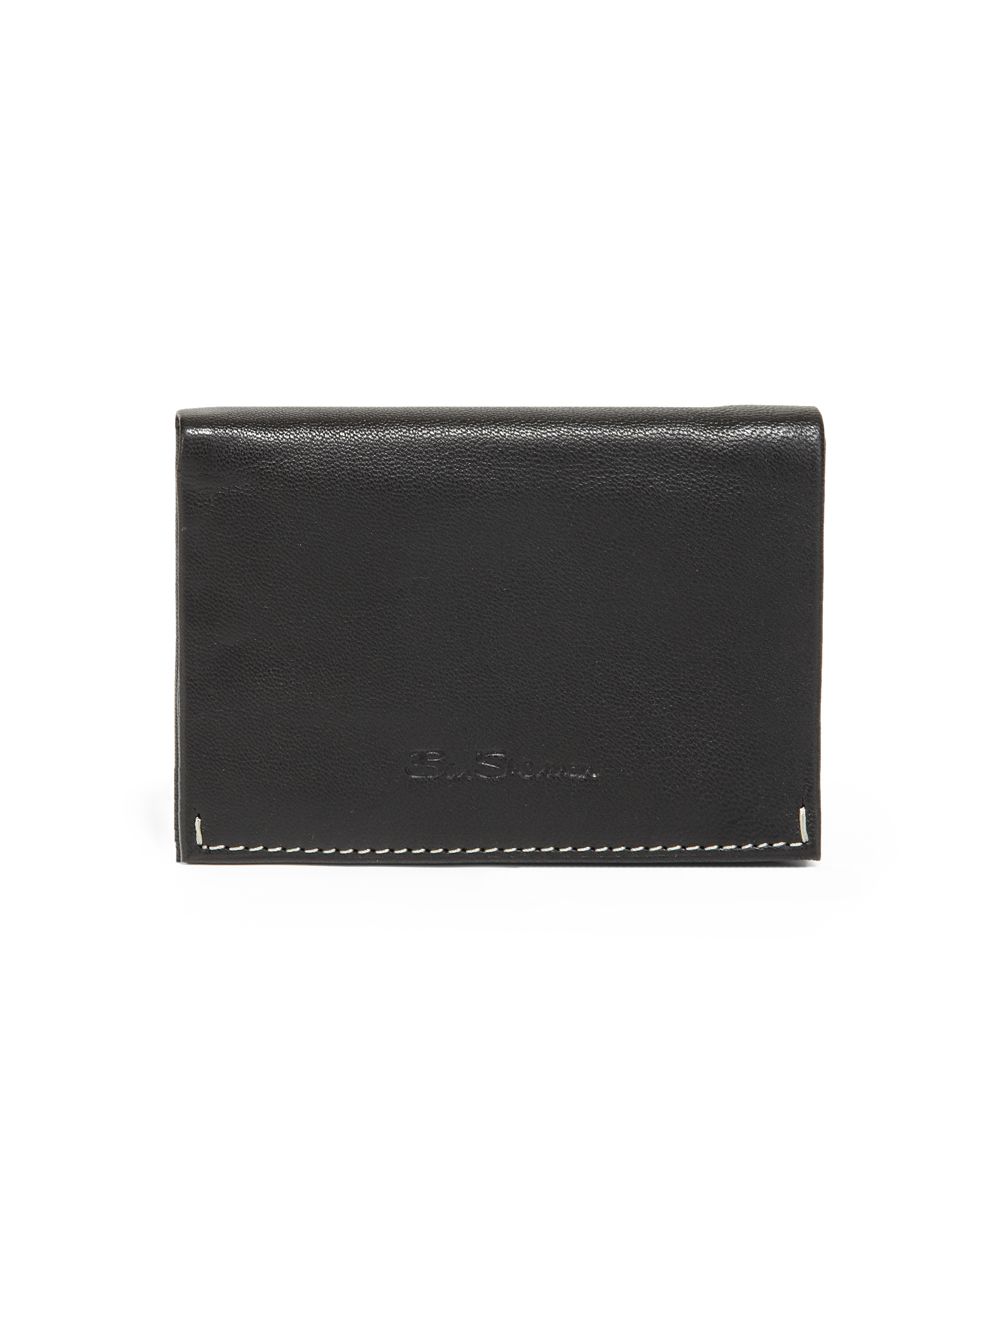 Lyst - Ben Sherman Leather Trifold Wallet in Black for Men